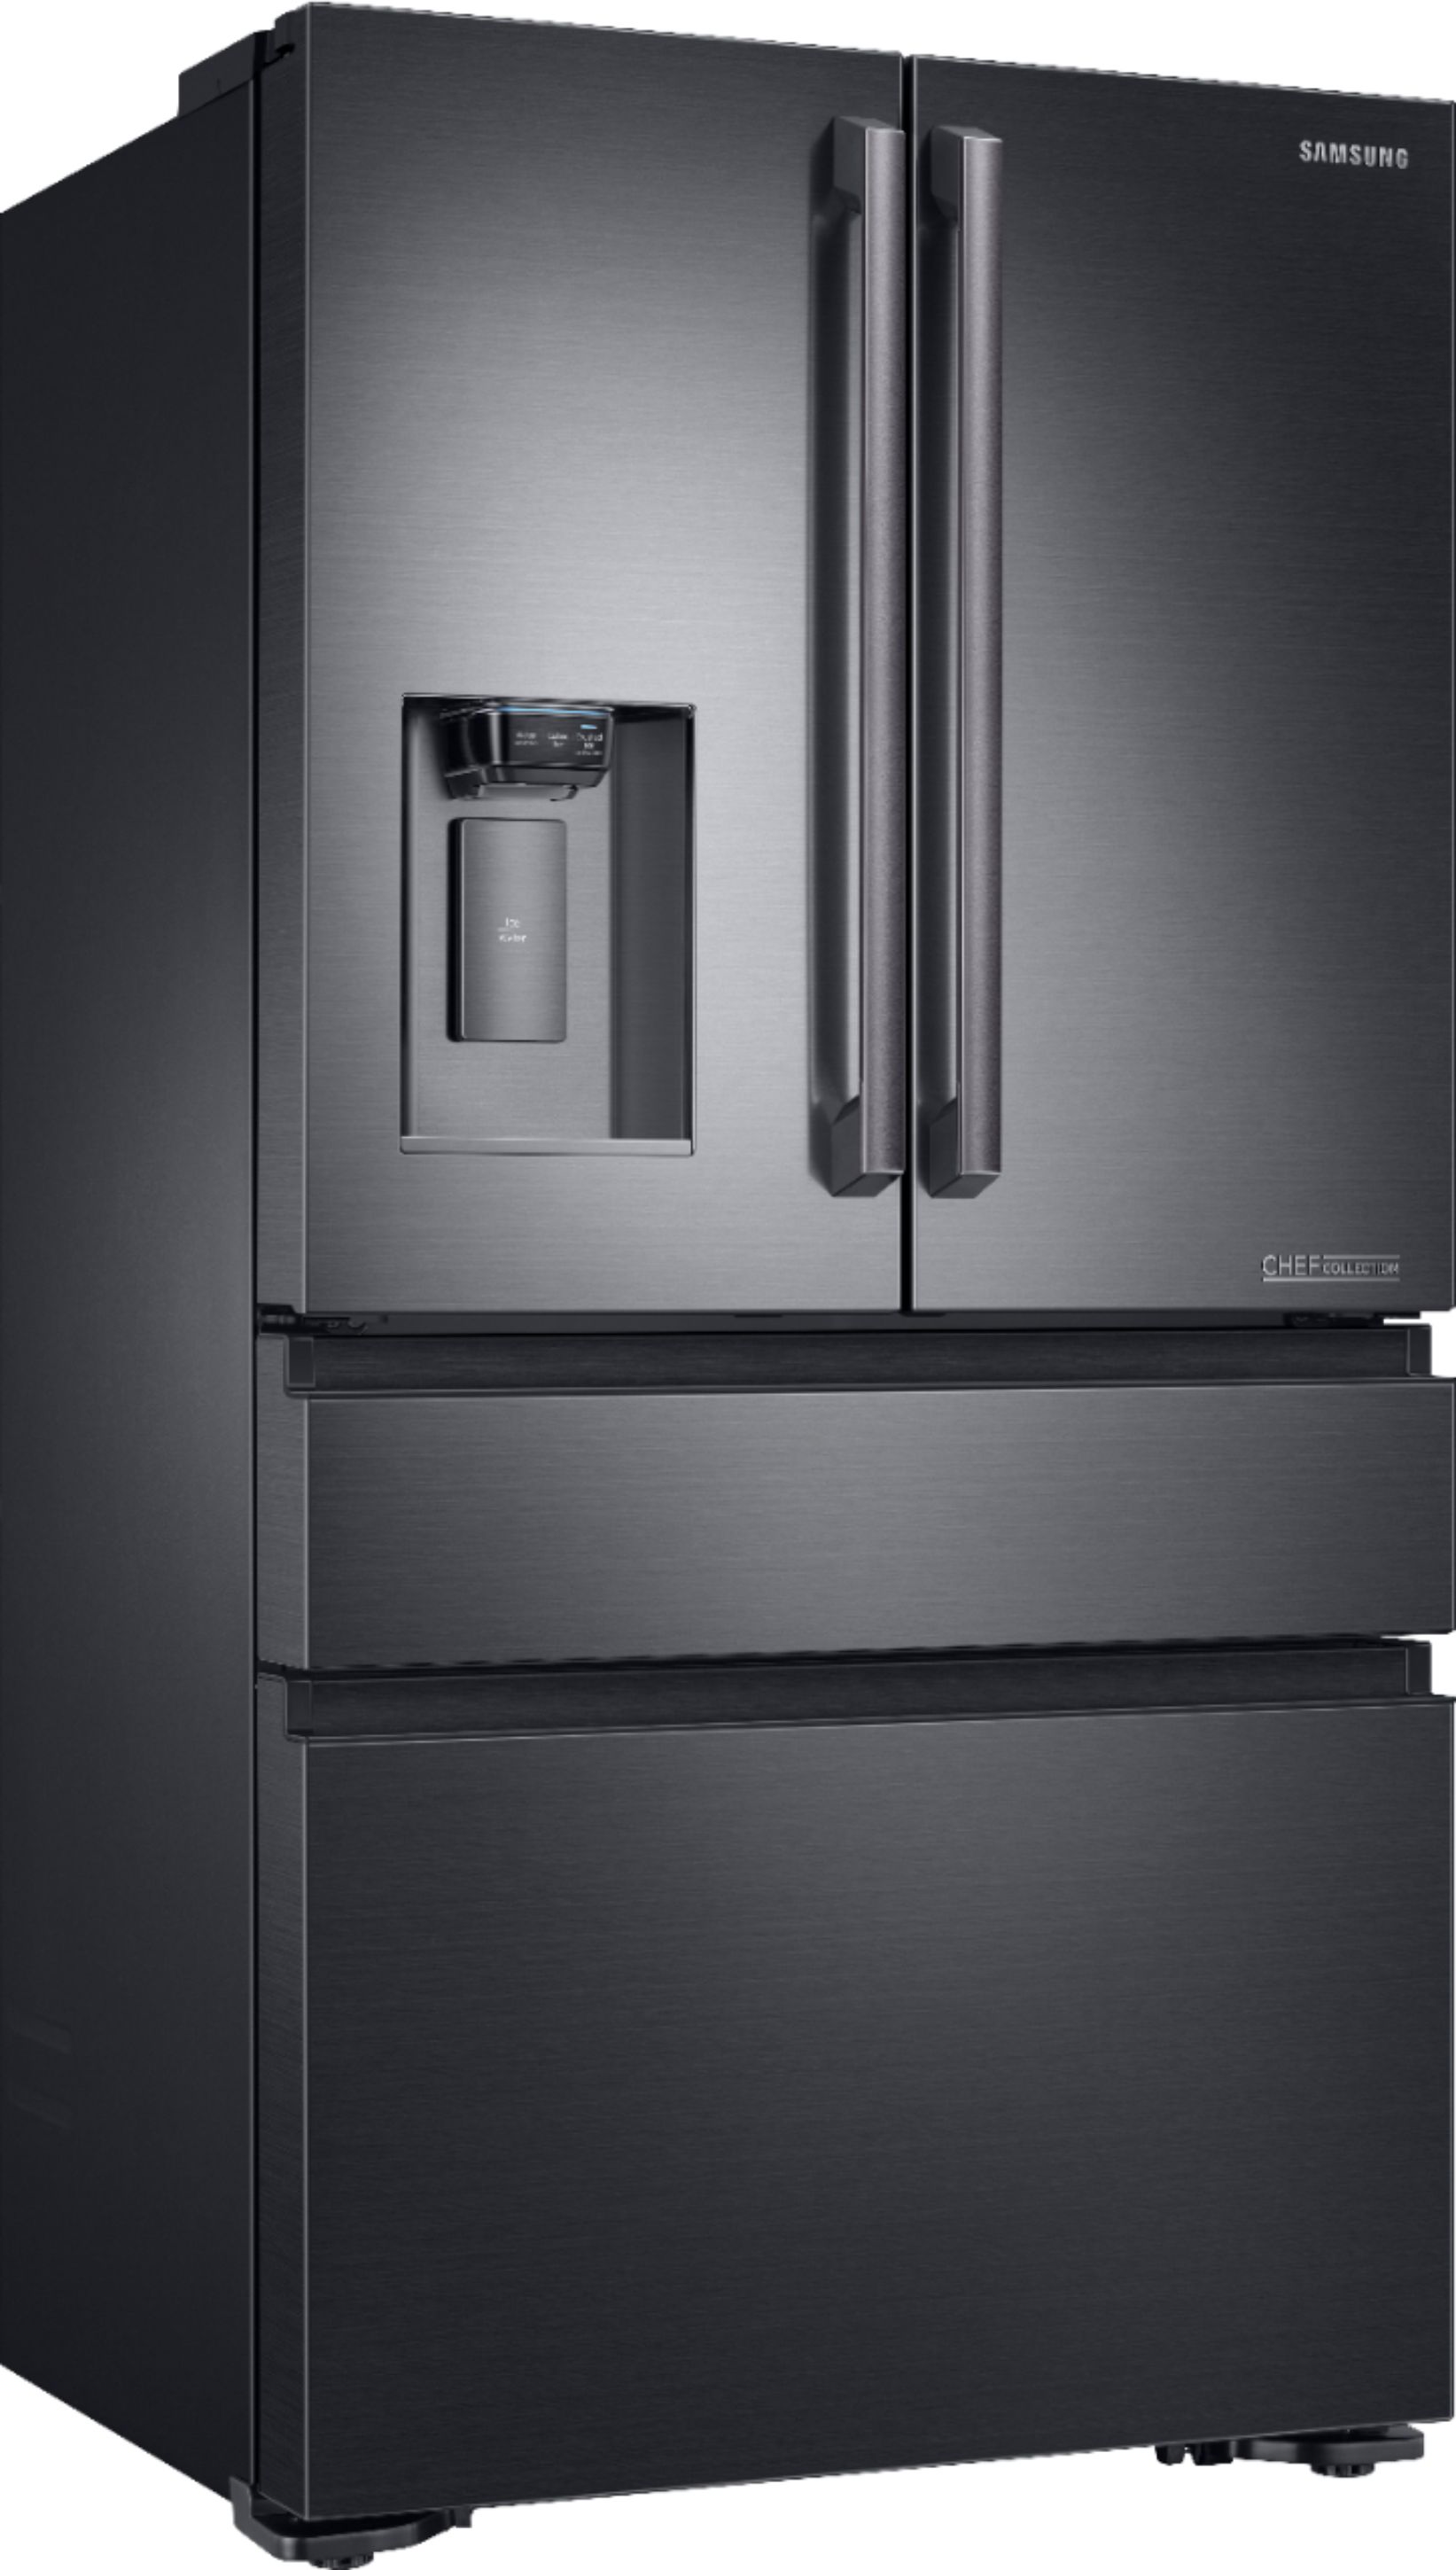 Angle View: Samsung - Chef Collection 22.6 Cu. Ft. 4-Door Flex French Door Counter-Depth Fingerprint Resistant Refrigerator - Matte black stainless steel